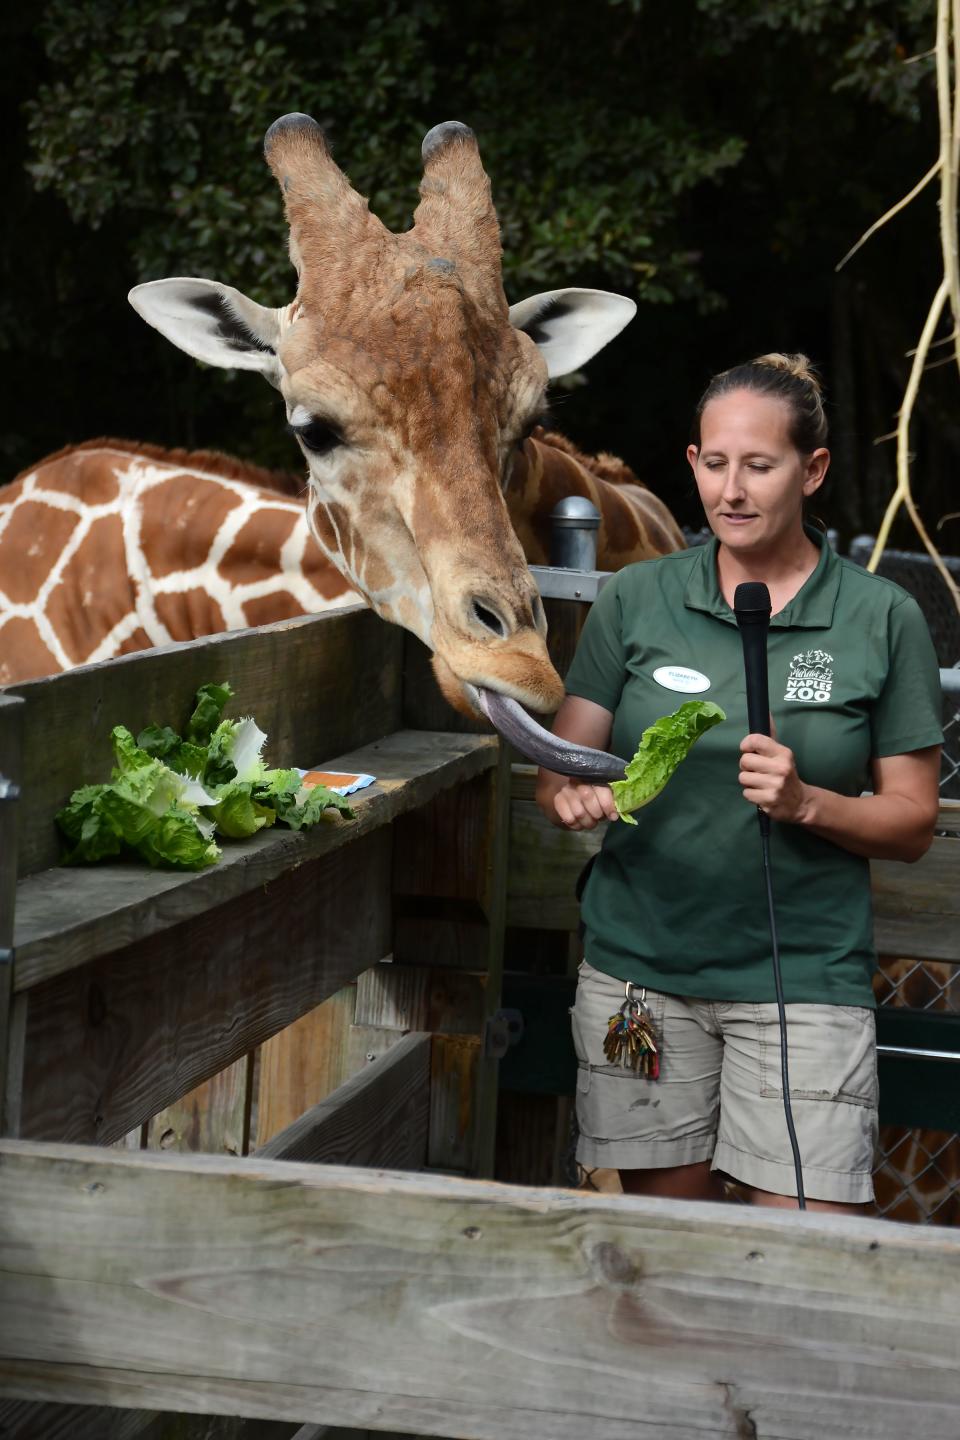 Naples Zoo giraffe-wrangler Elizabeth Johnson speaks to children in schools, as Jumanji sticks out his tongue at the Naples Zoo.